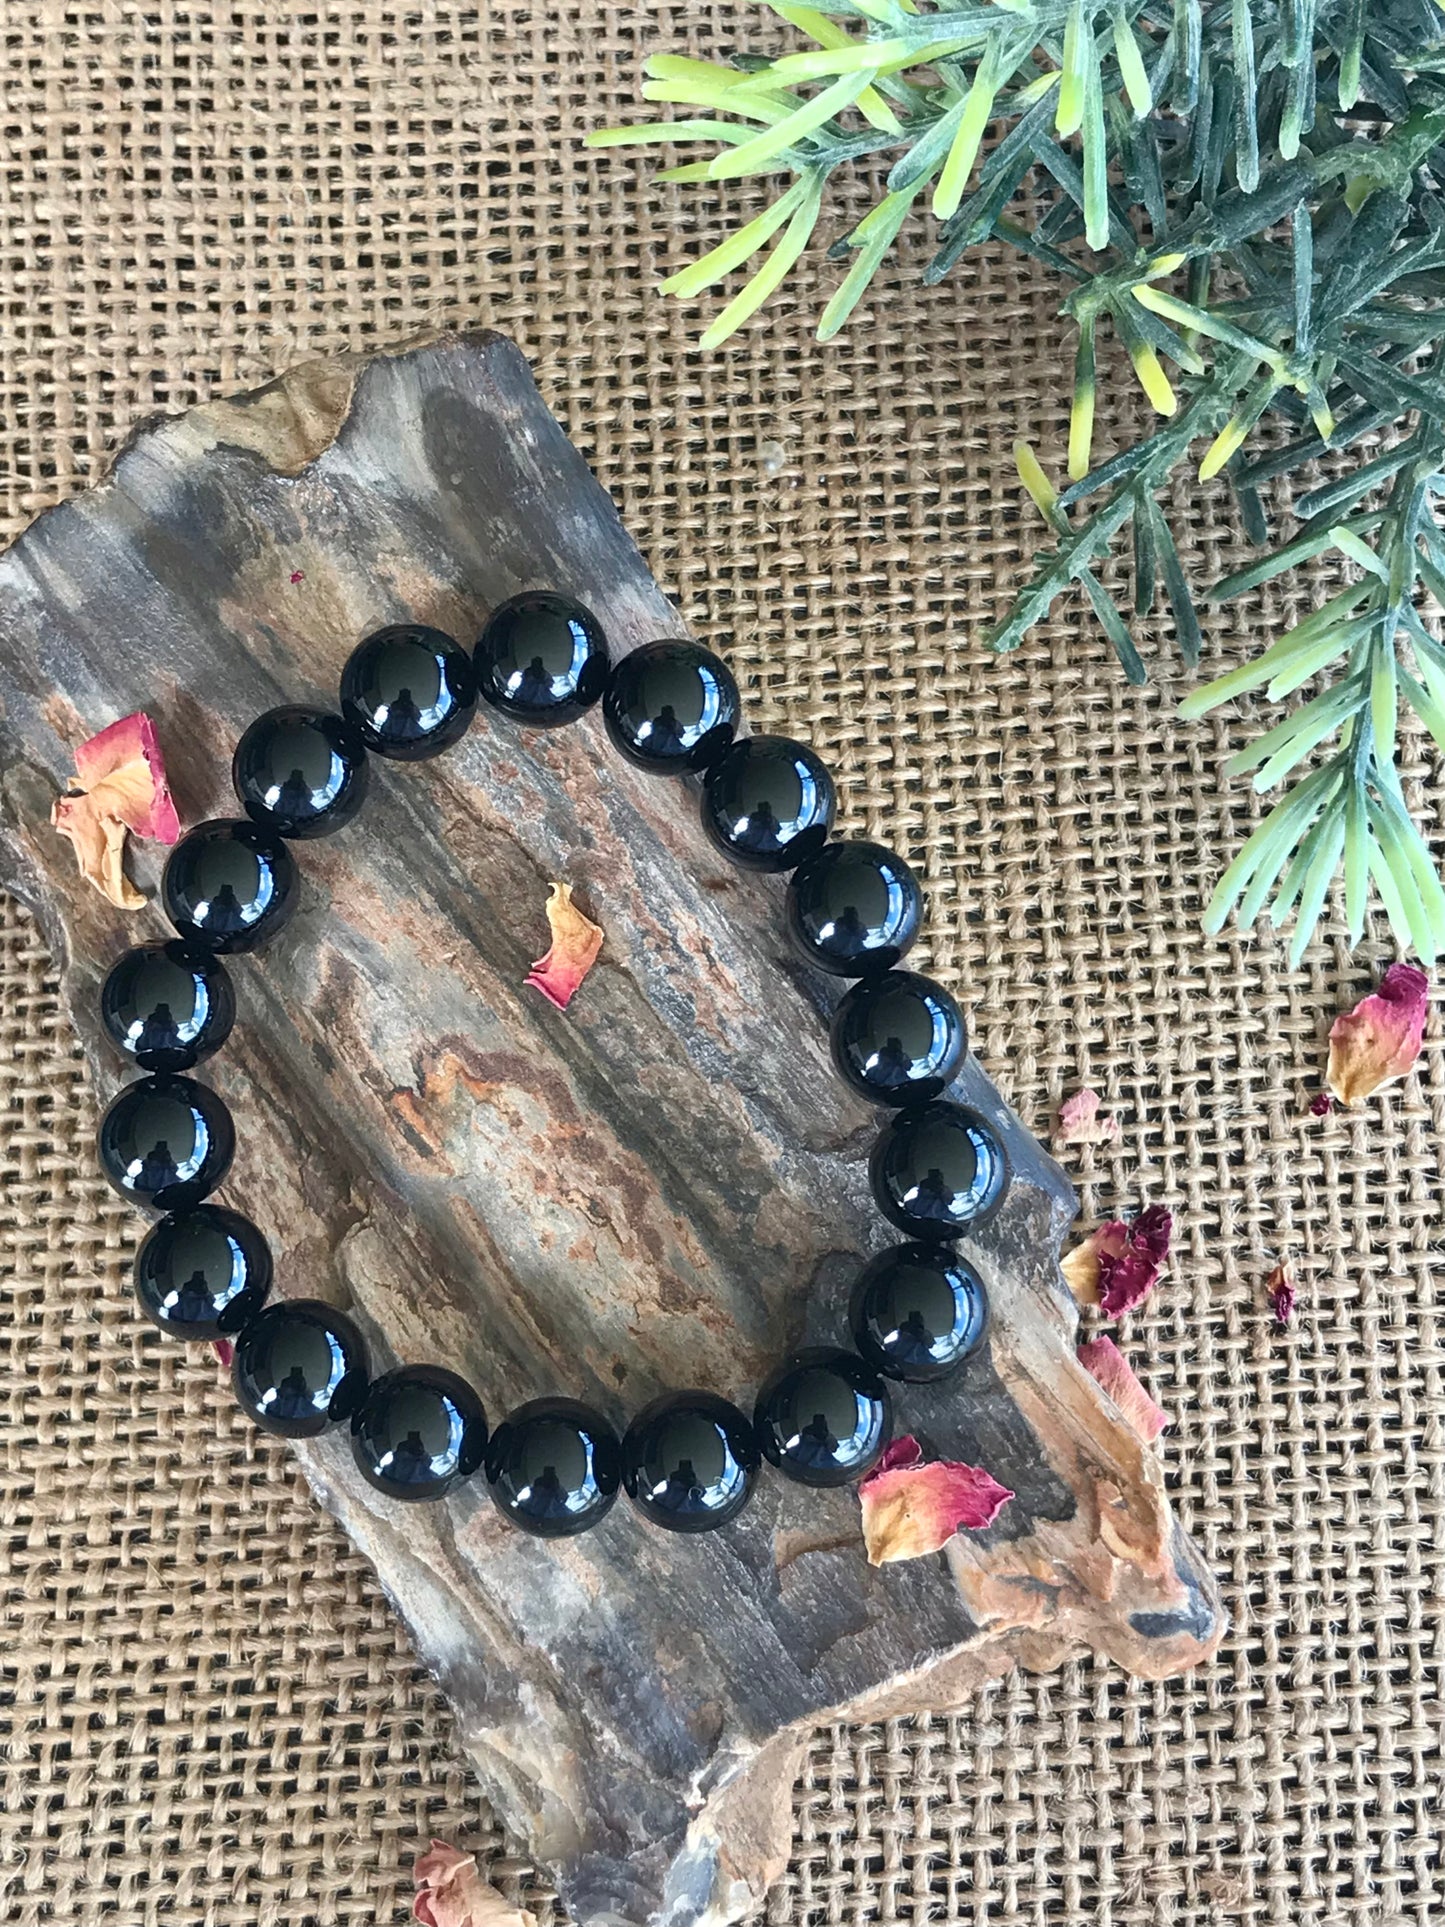 Black Obsidian DEEP RENEWAL Healing Bracelet ©️